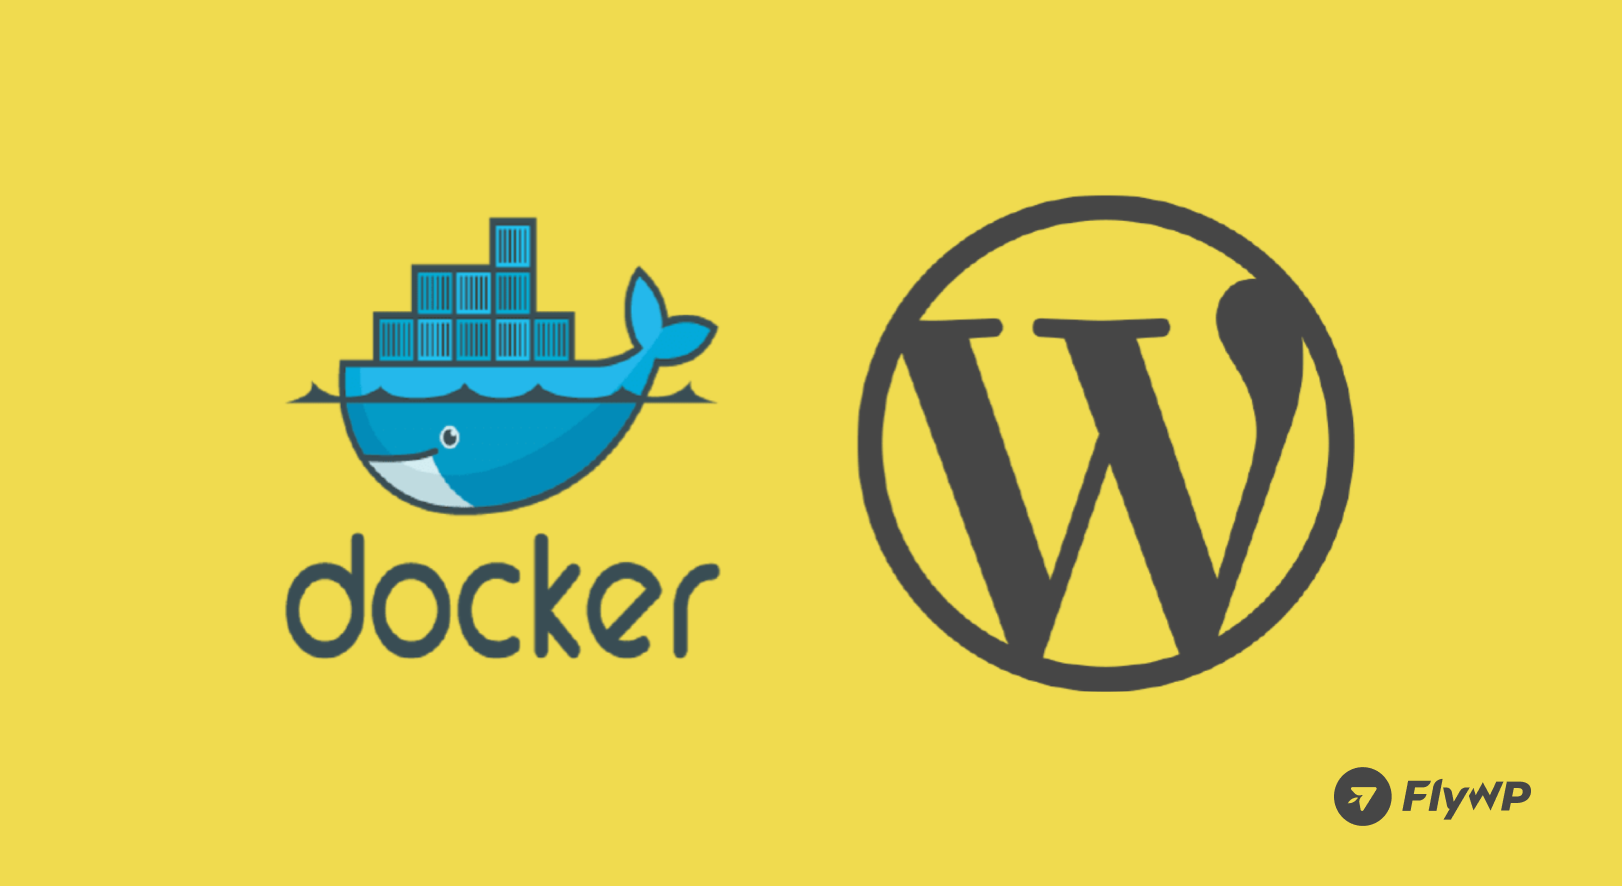 Understanding Docker and WordPress integration